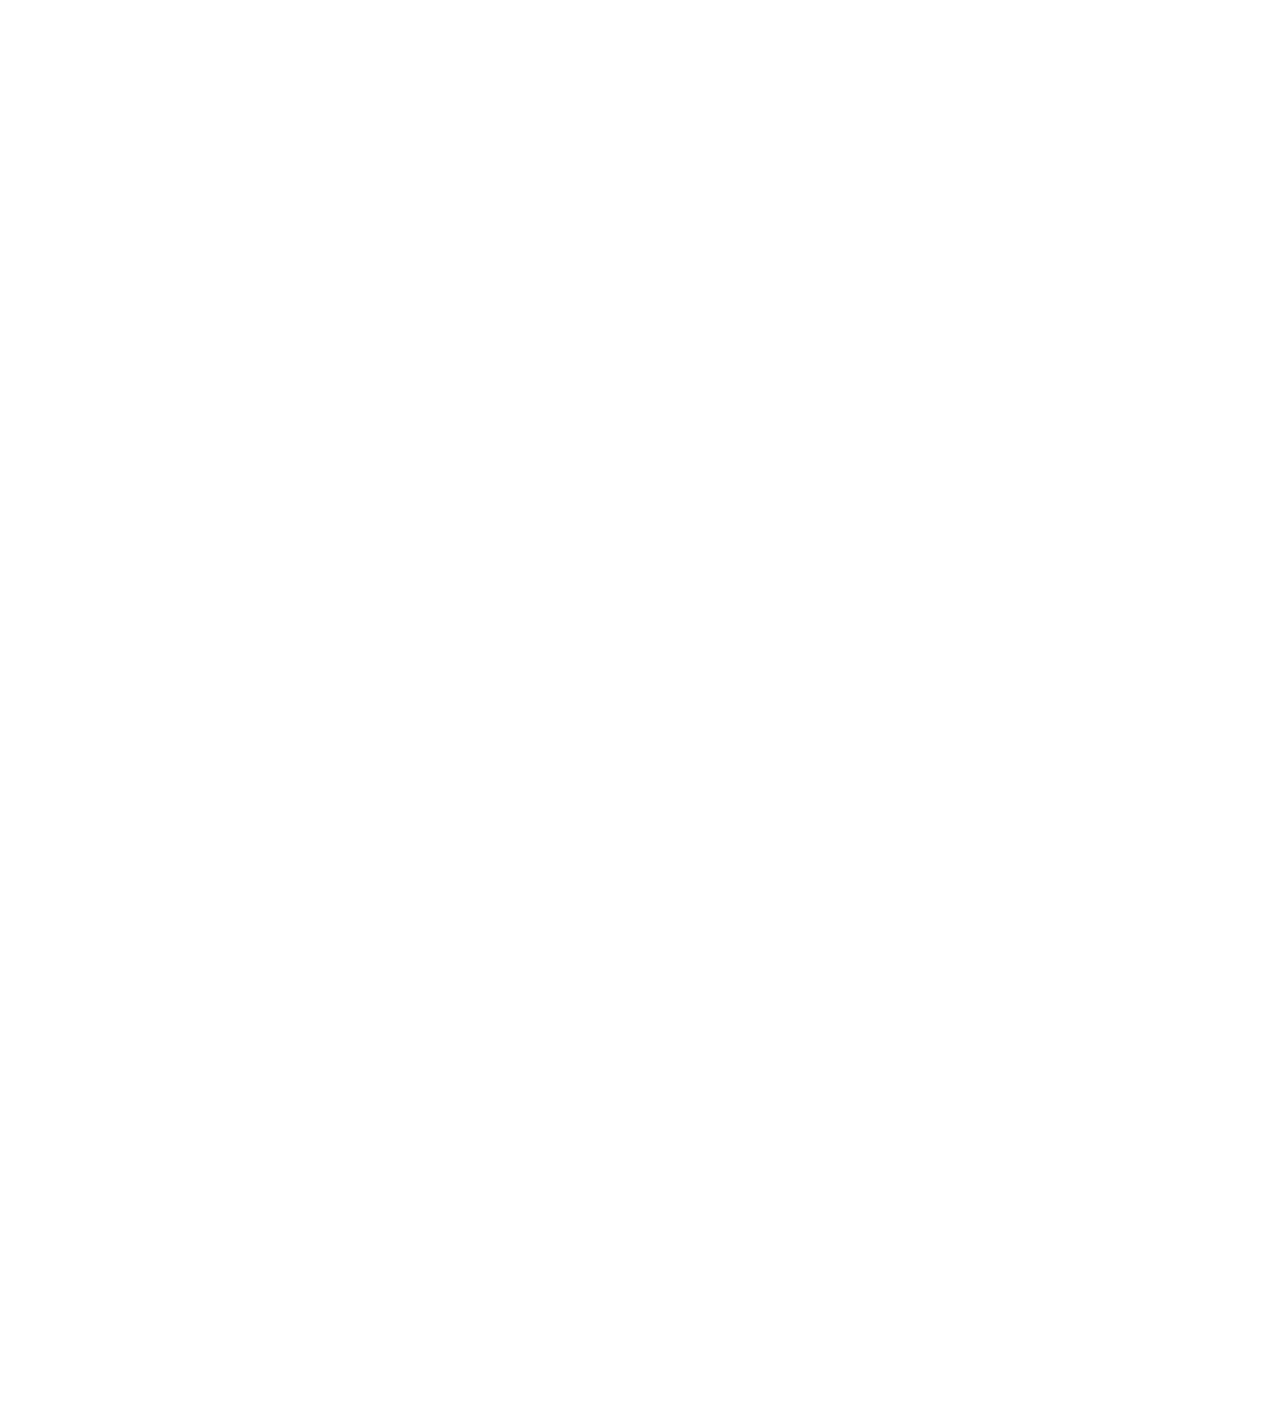 GiRco's logo